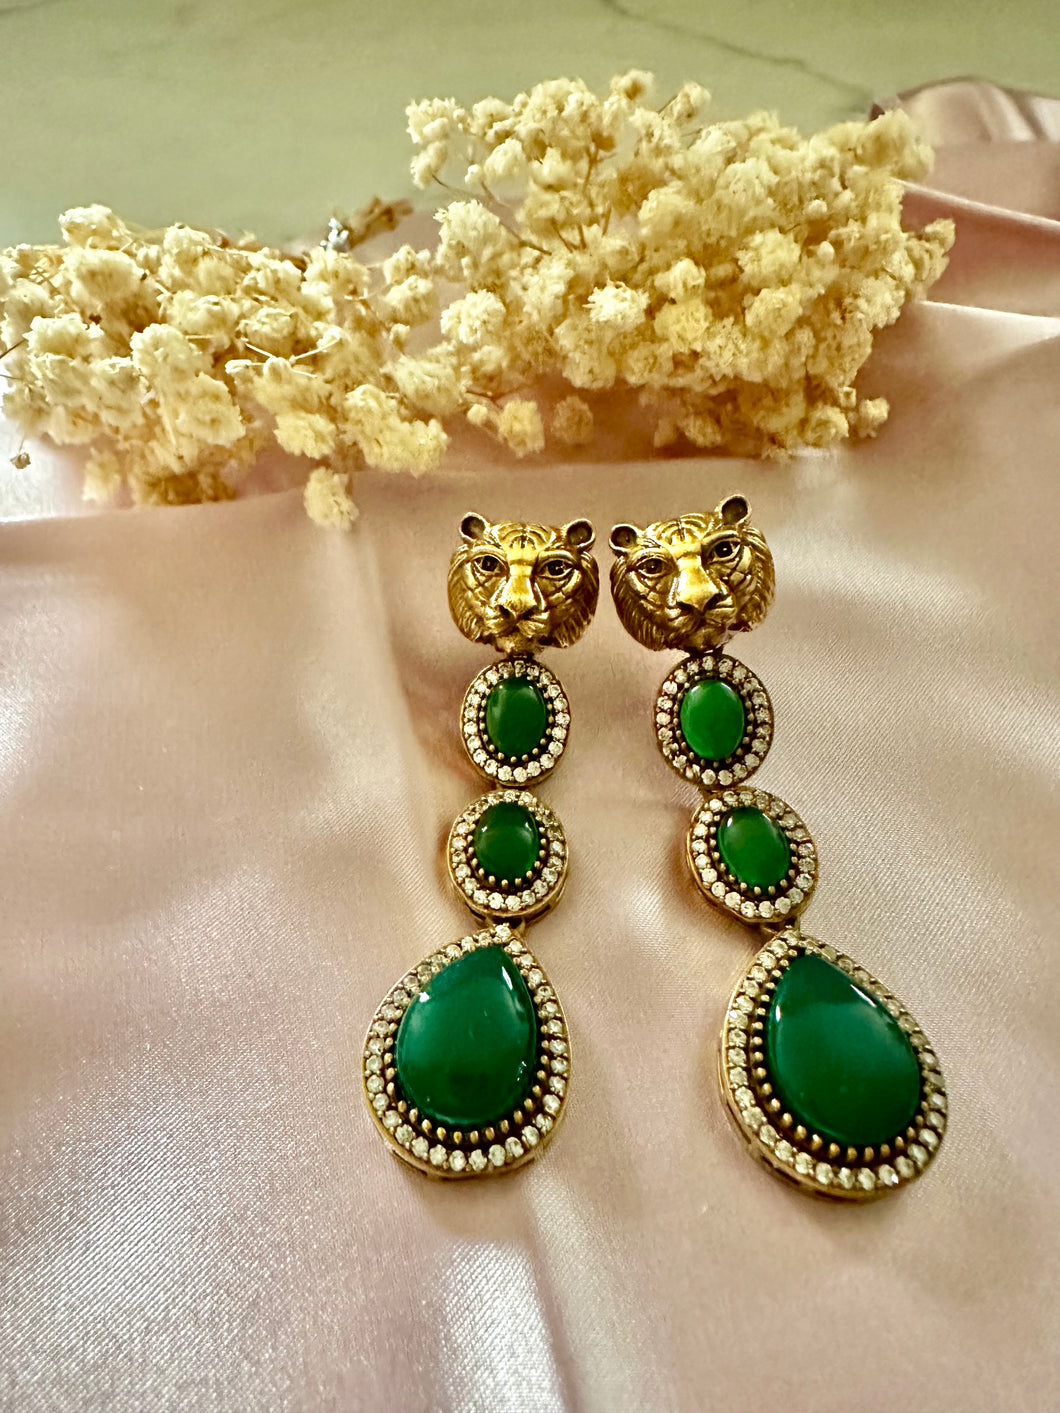 Green Sabyasachi inspired earrings